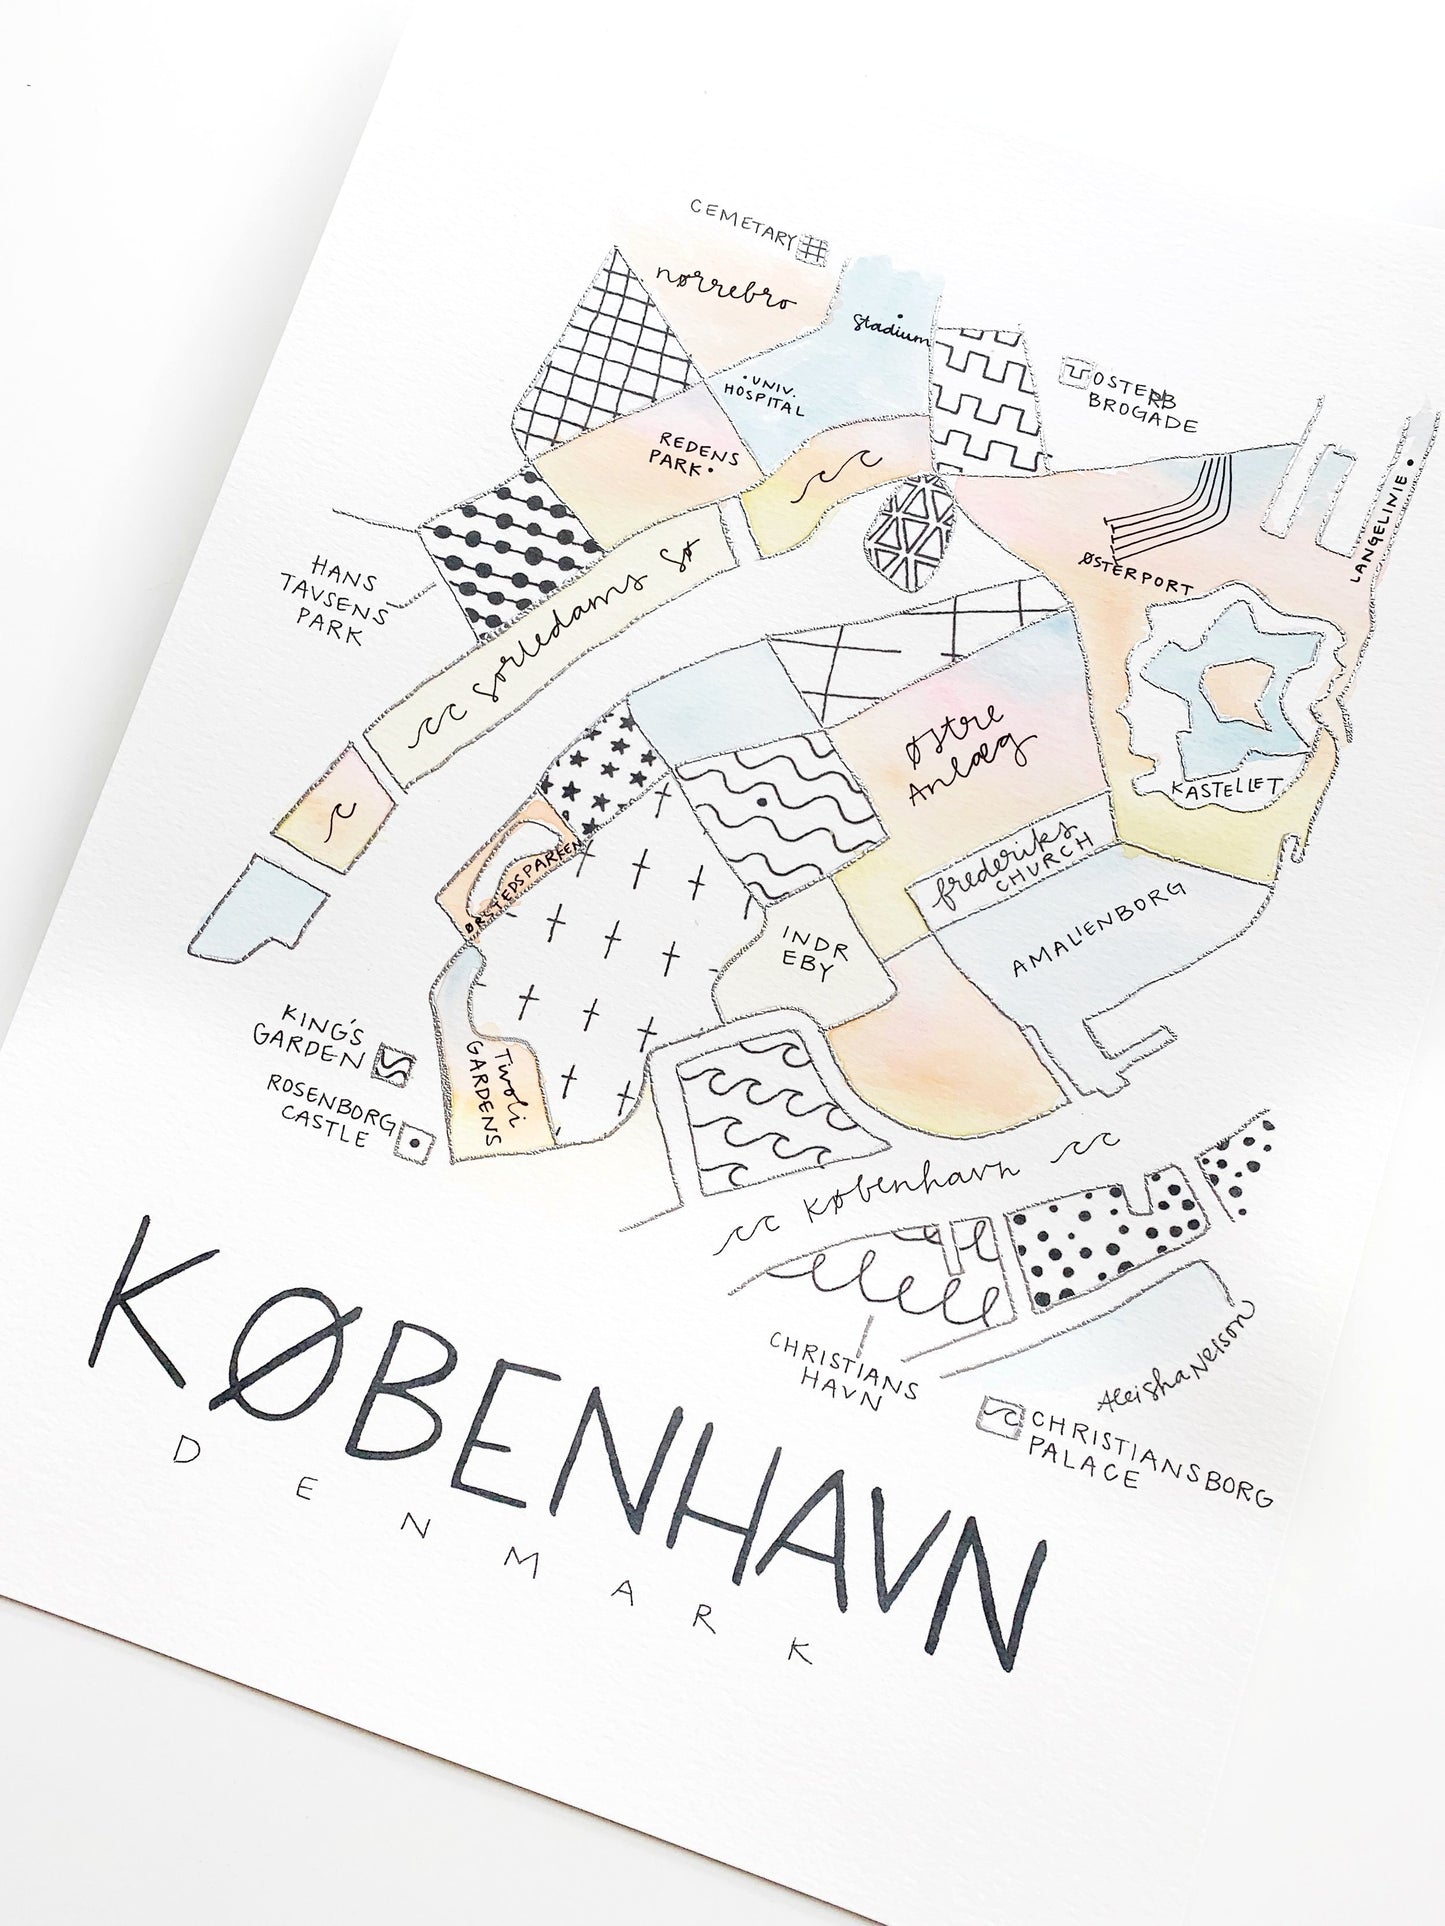 Hand Painted Copenhagen (Kobenhavn) Map